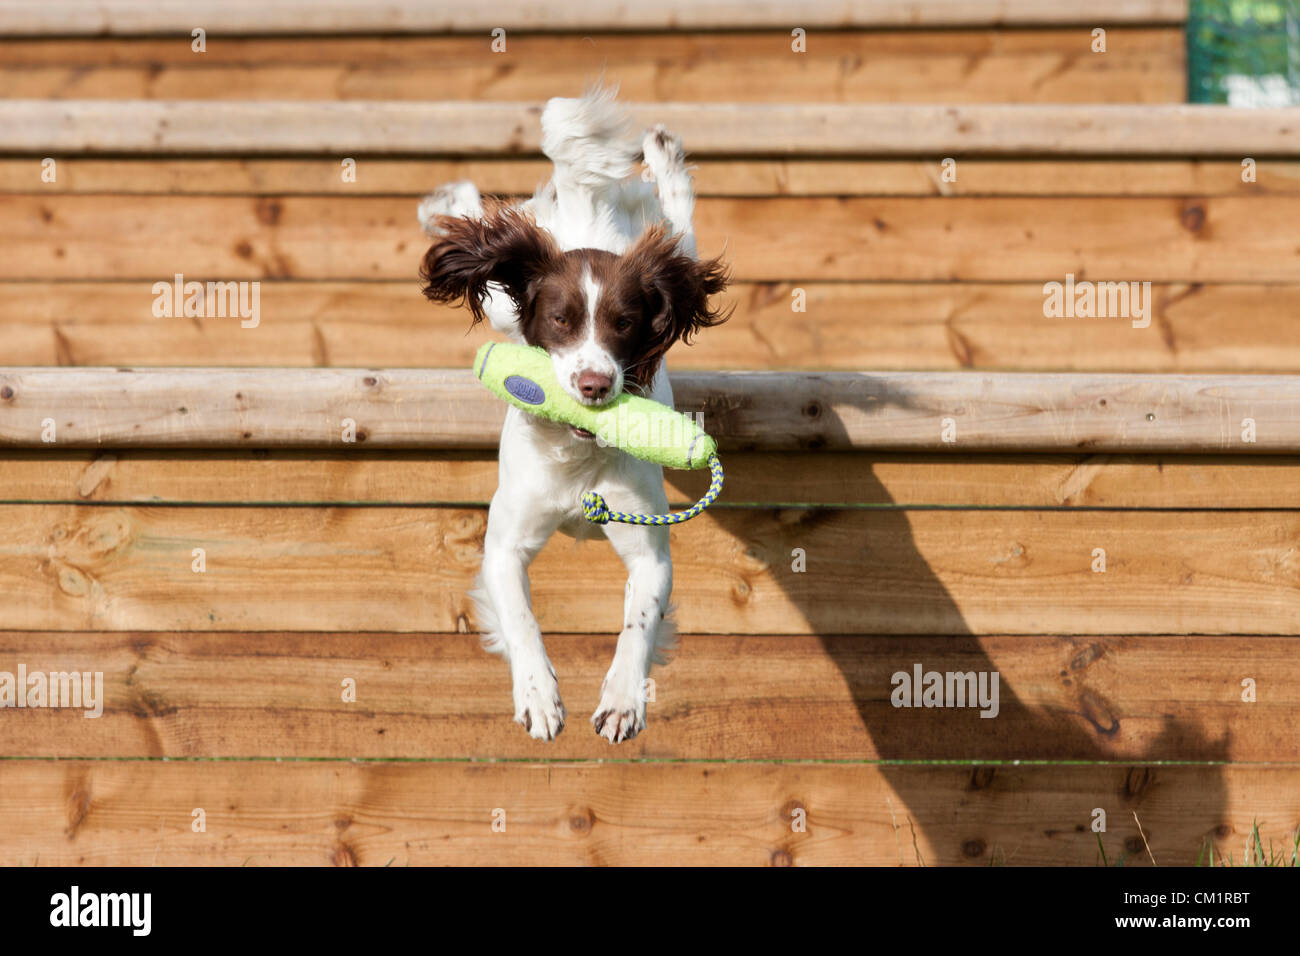 15.09.2012 - The Midland Game Fair at Weston Park, Shropshire, UK. A Gundog retrieving over jumps. Stock Photo